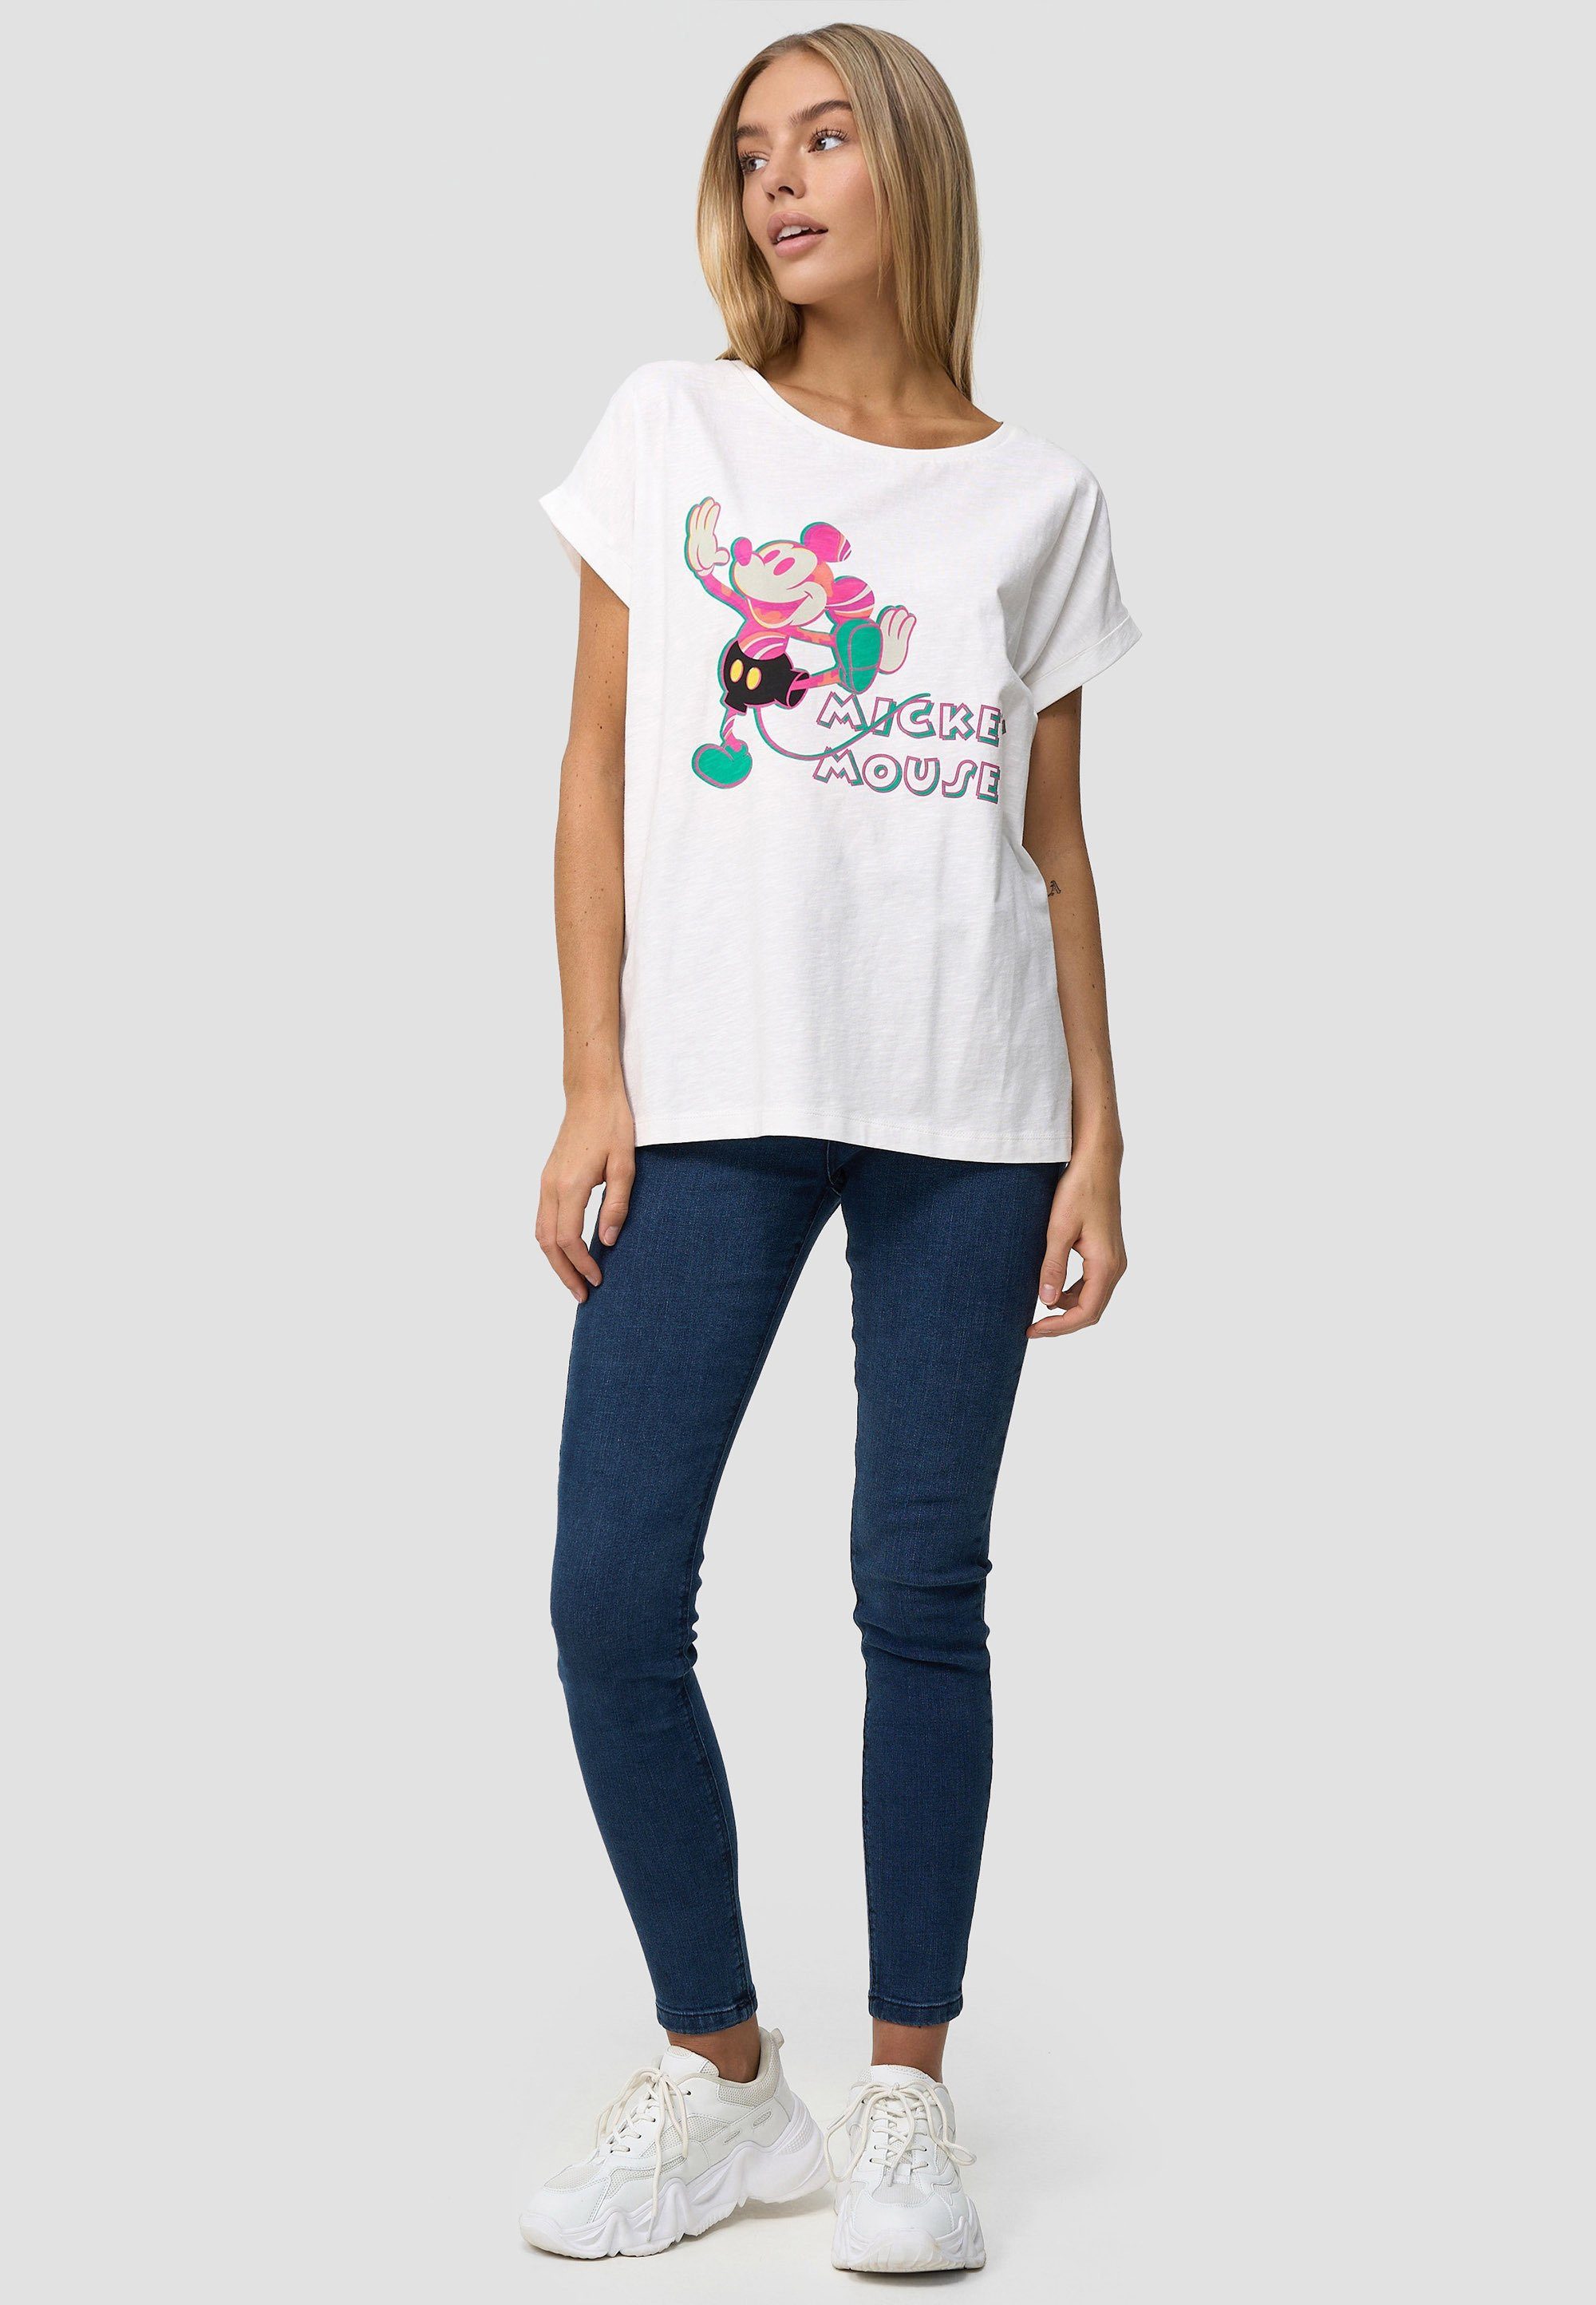 Pose T-Shirt Bio-Baumwolle Mouse Mickey Recovered Colourful GOTS zertifizierte